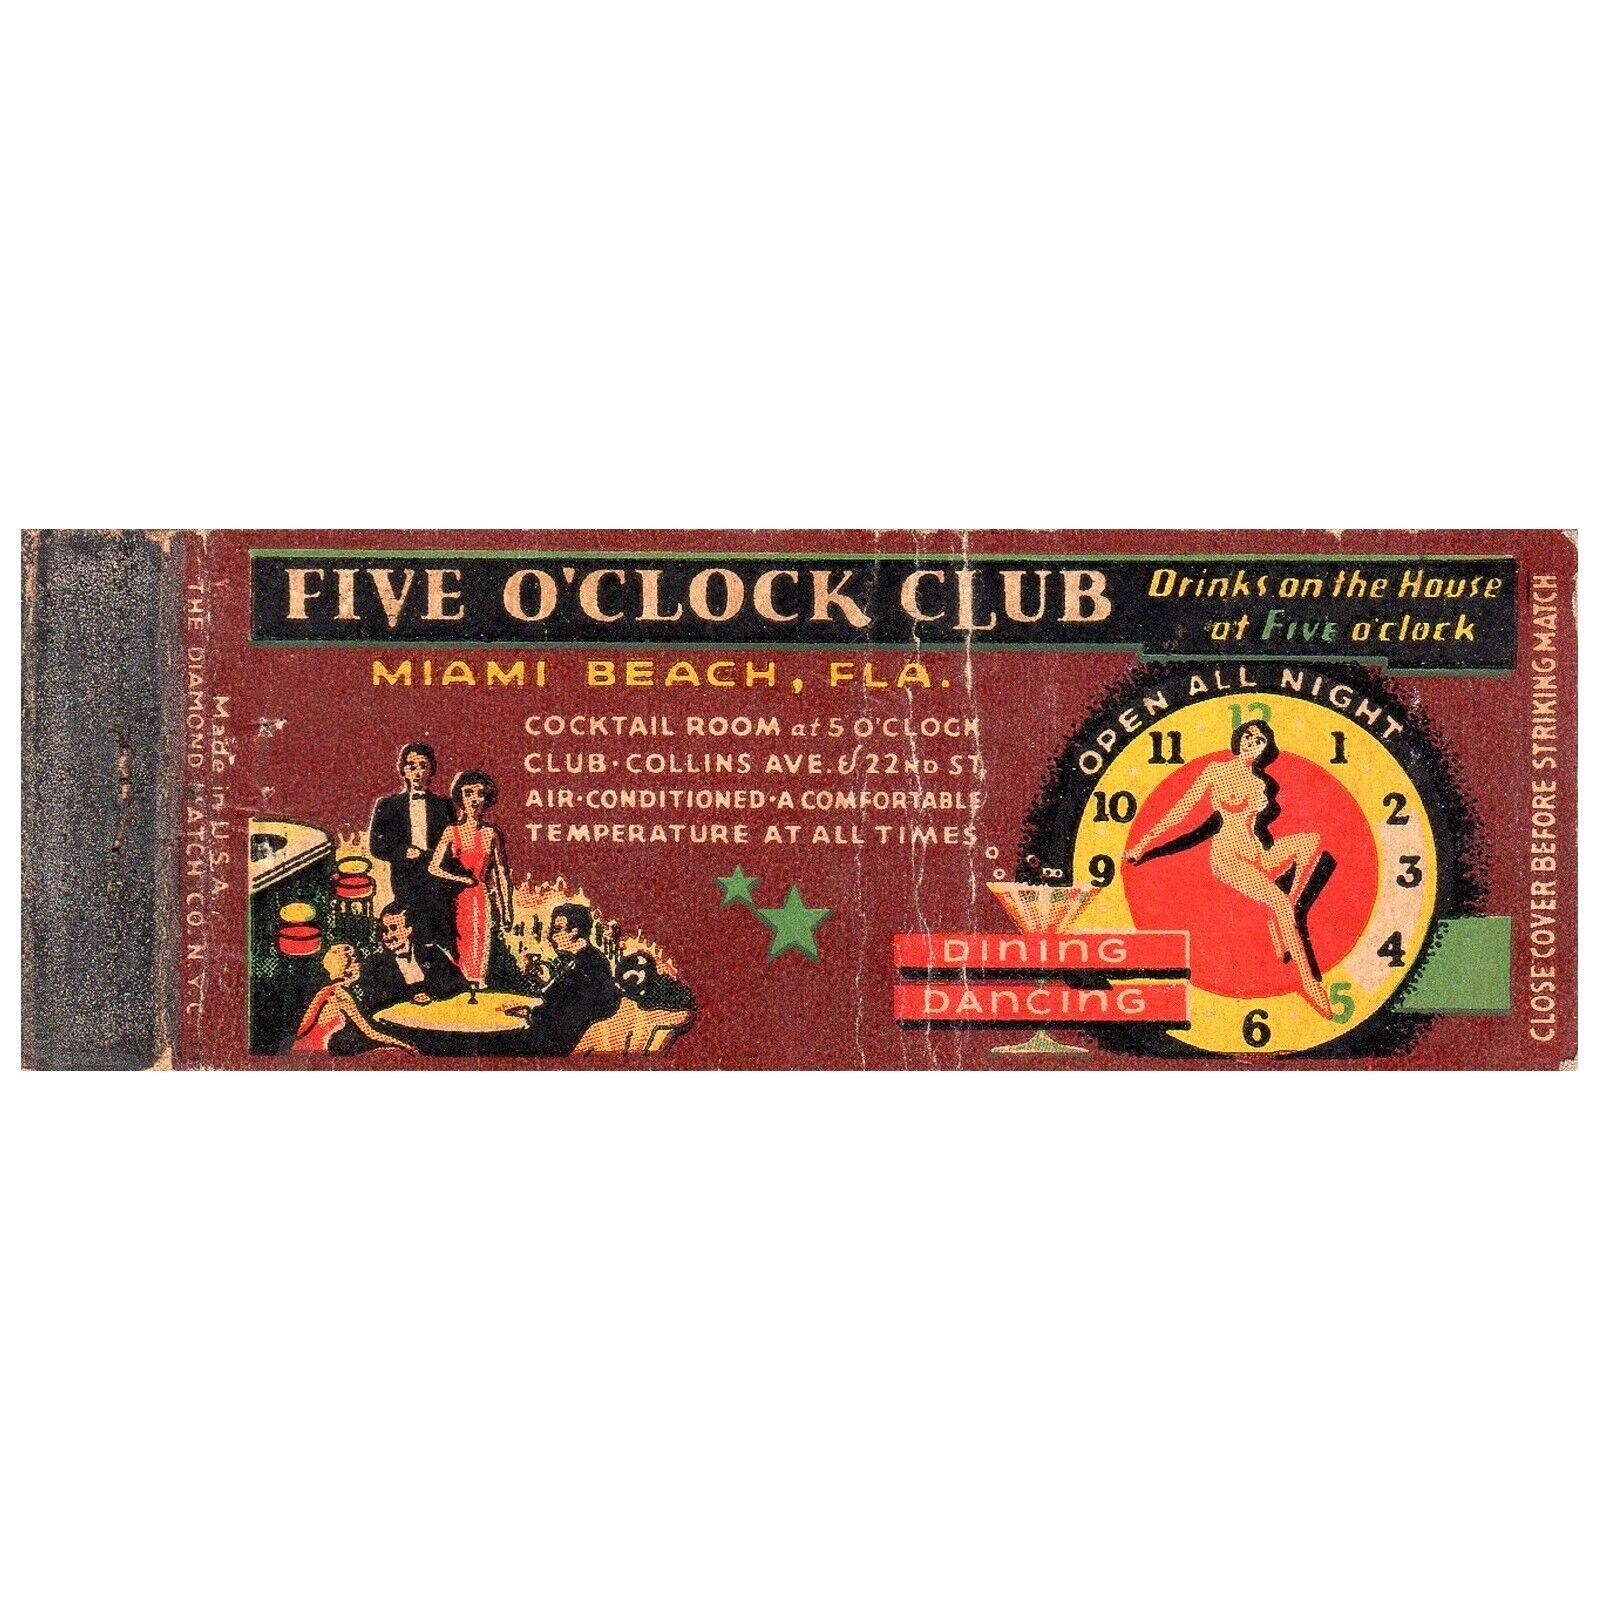 Vintage Matchbook Cover Five OClock Club Miami Beach FL full length girlie 1930s